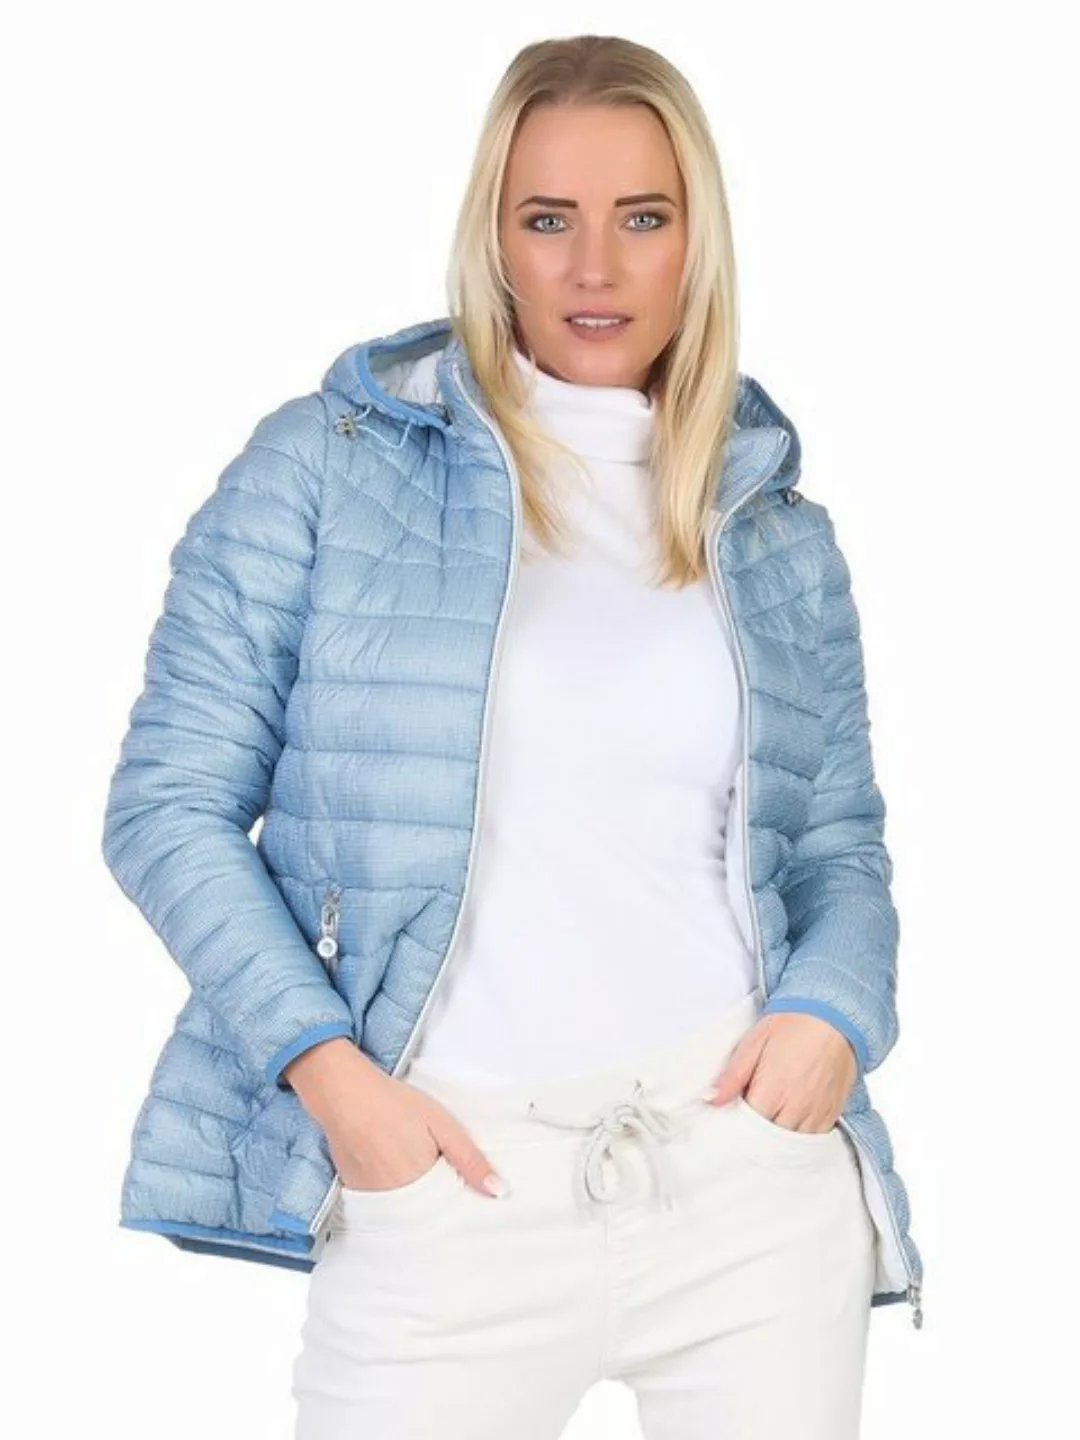 Aurela Damenmode Sommerjacke Steppjacke leichte Damen Übergangsjacke modisc günstig online kaufen